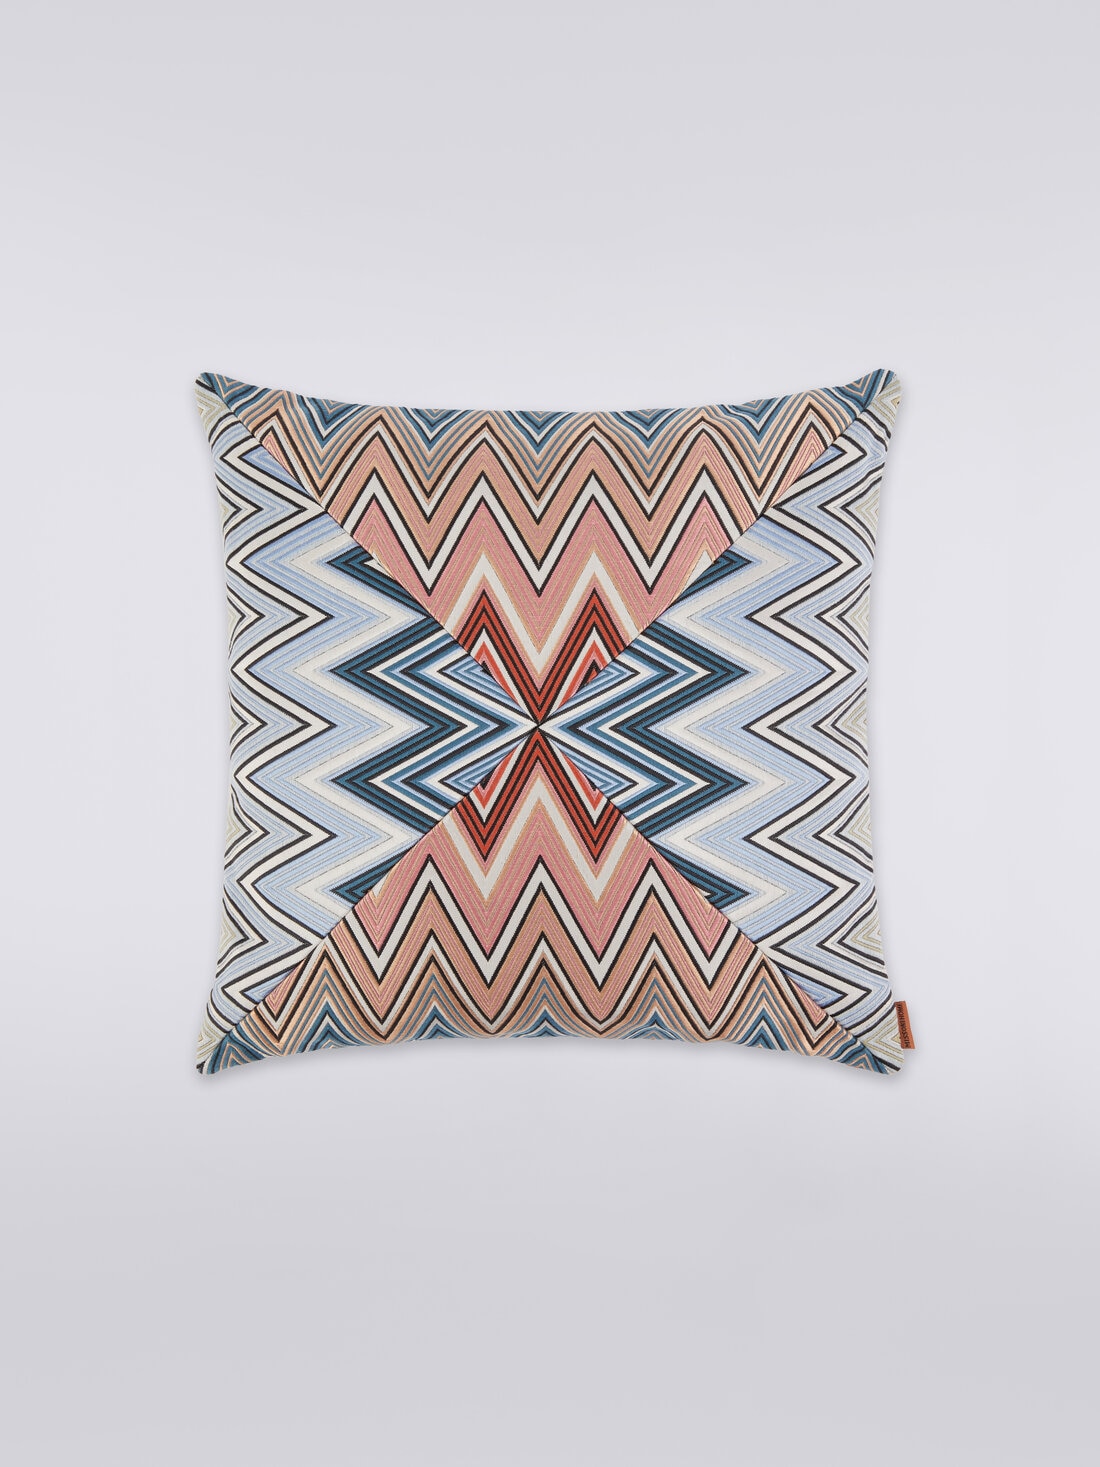 Birmingham PW cushion 40x40 cm, Multicoloured  - 8051275581260 - 0